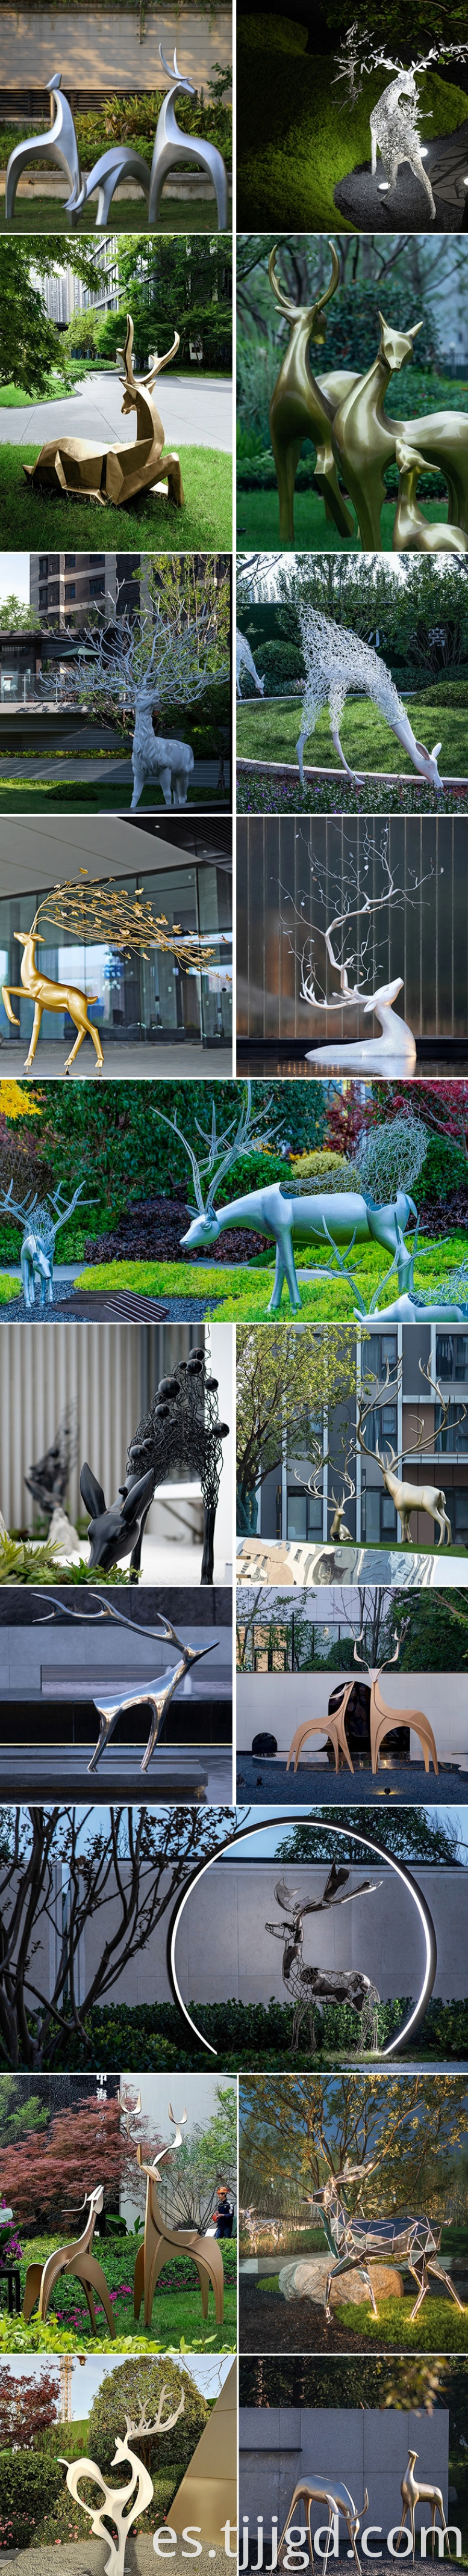 deer statues for sale